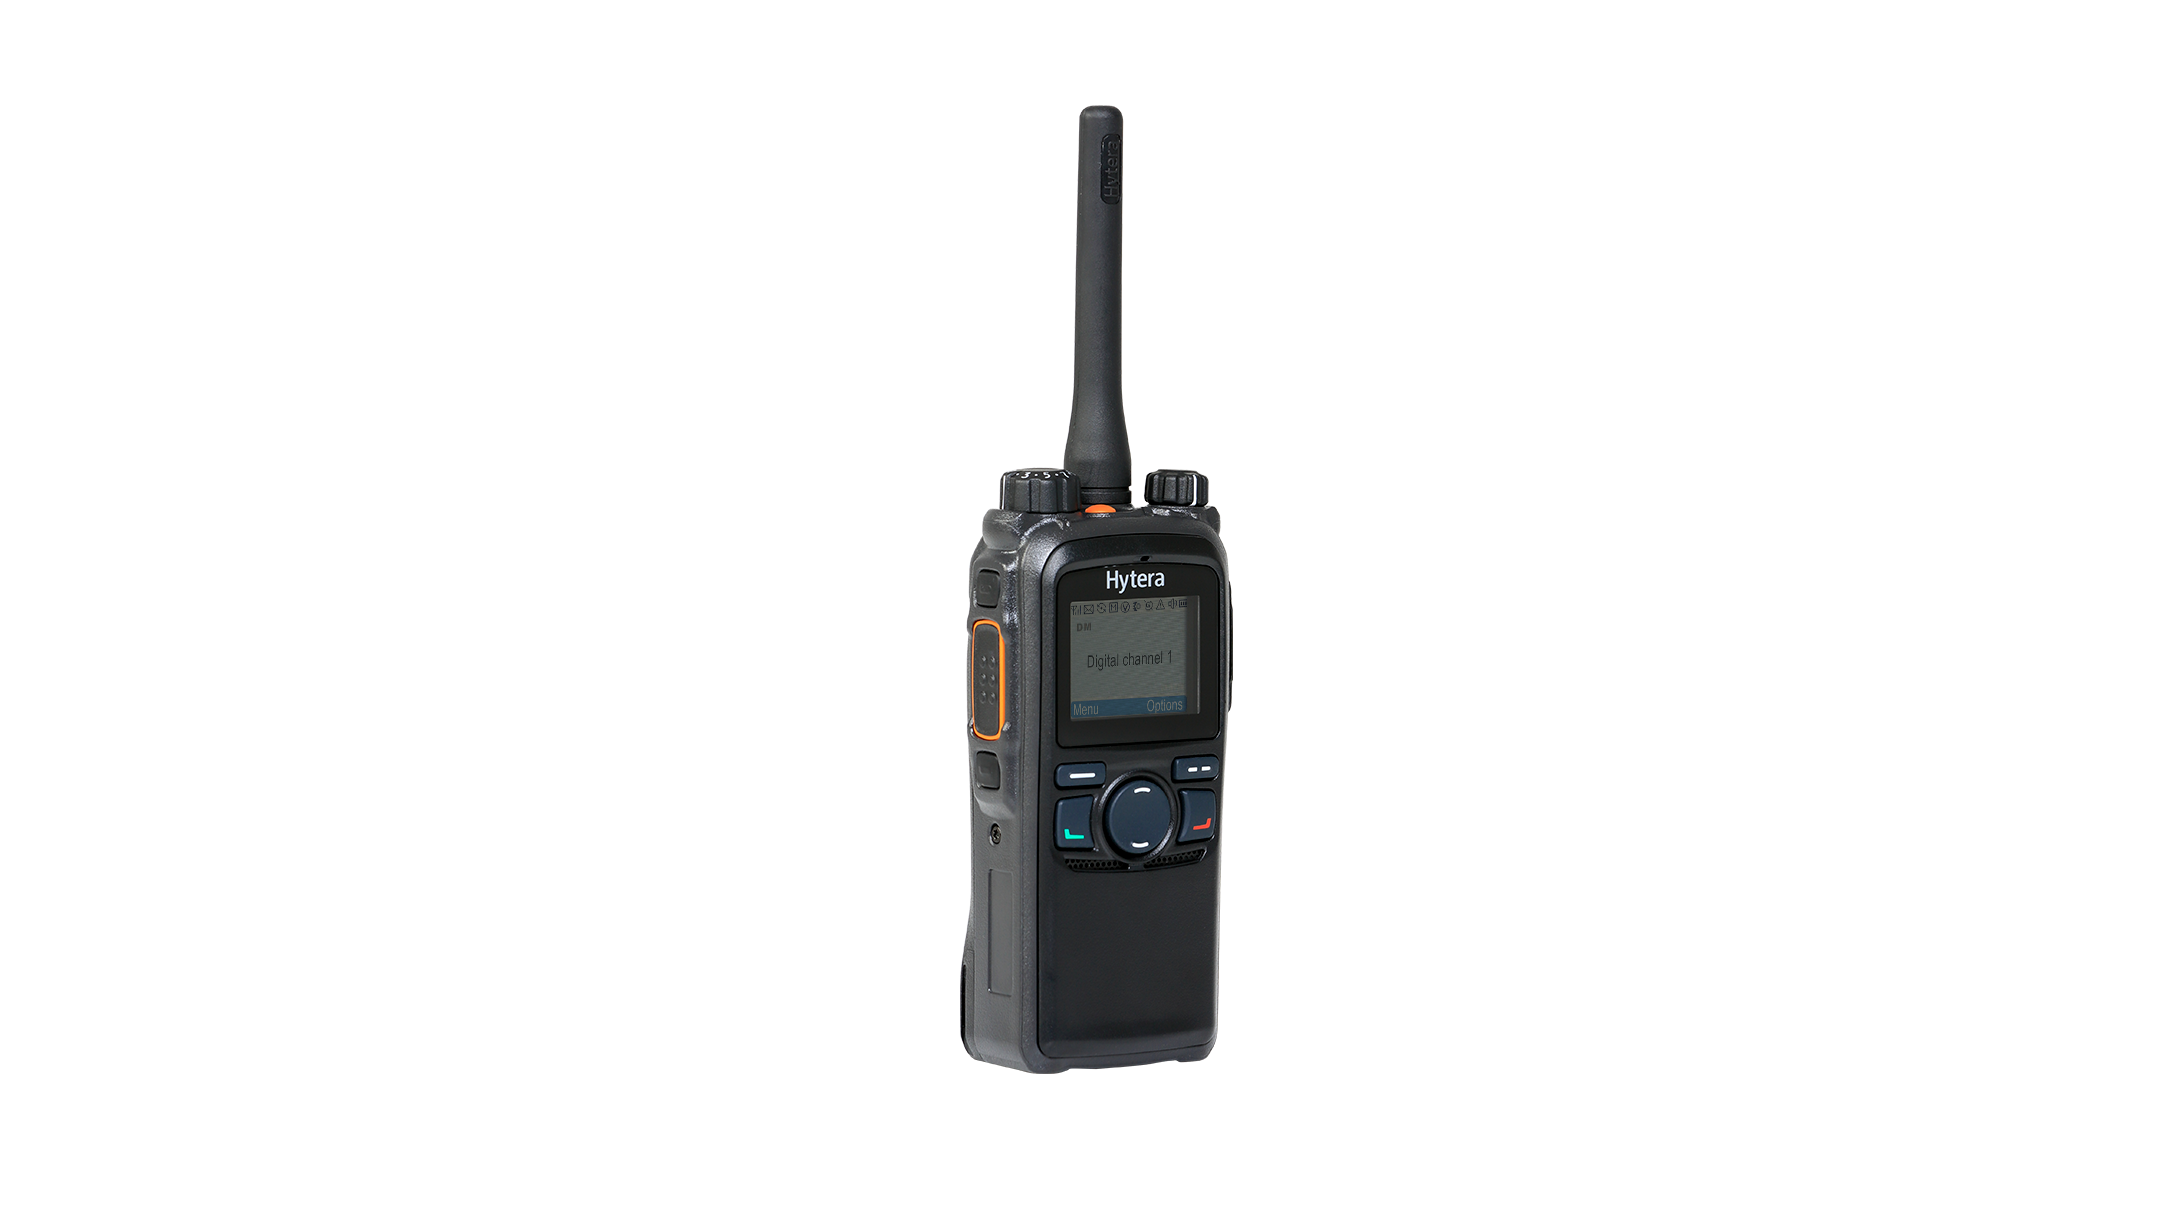 PD75X Professional DMR Portable Two-way Radio